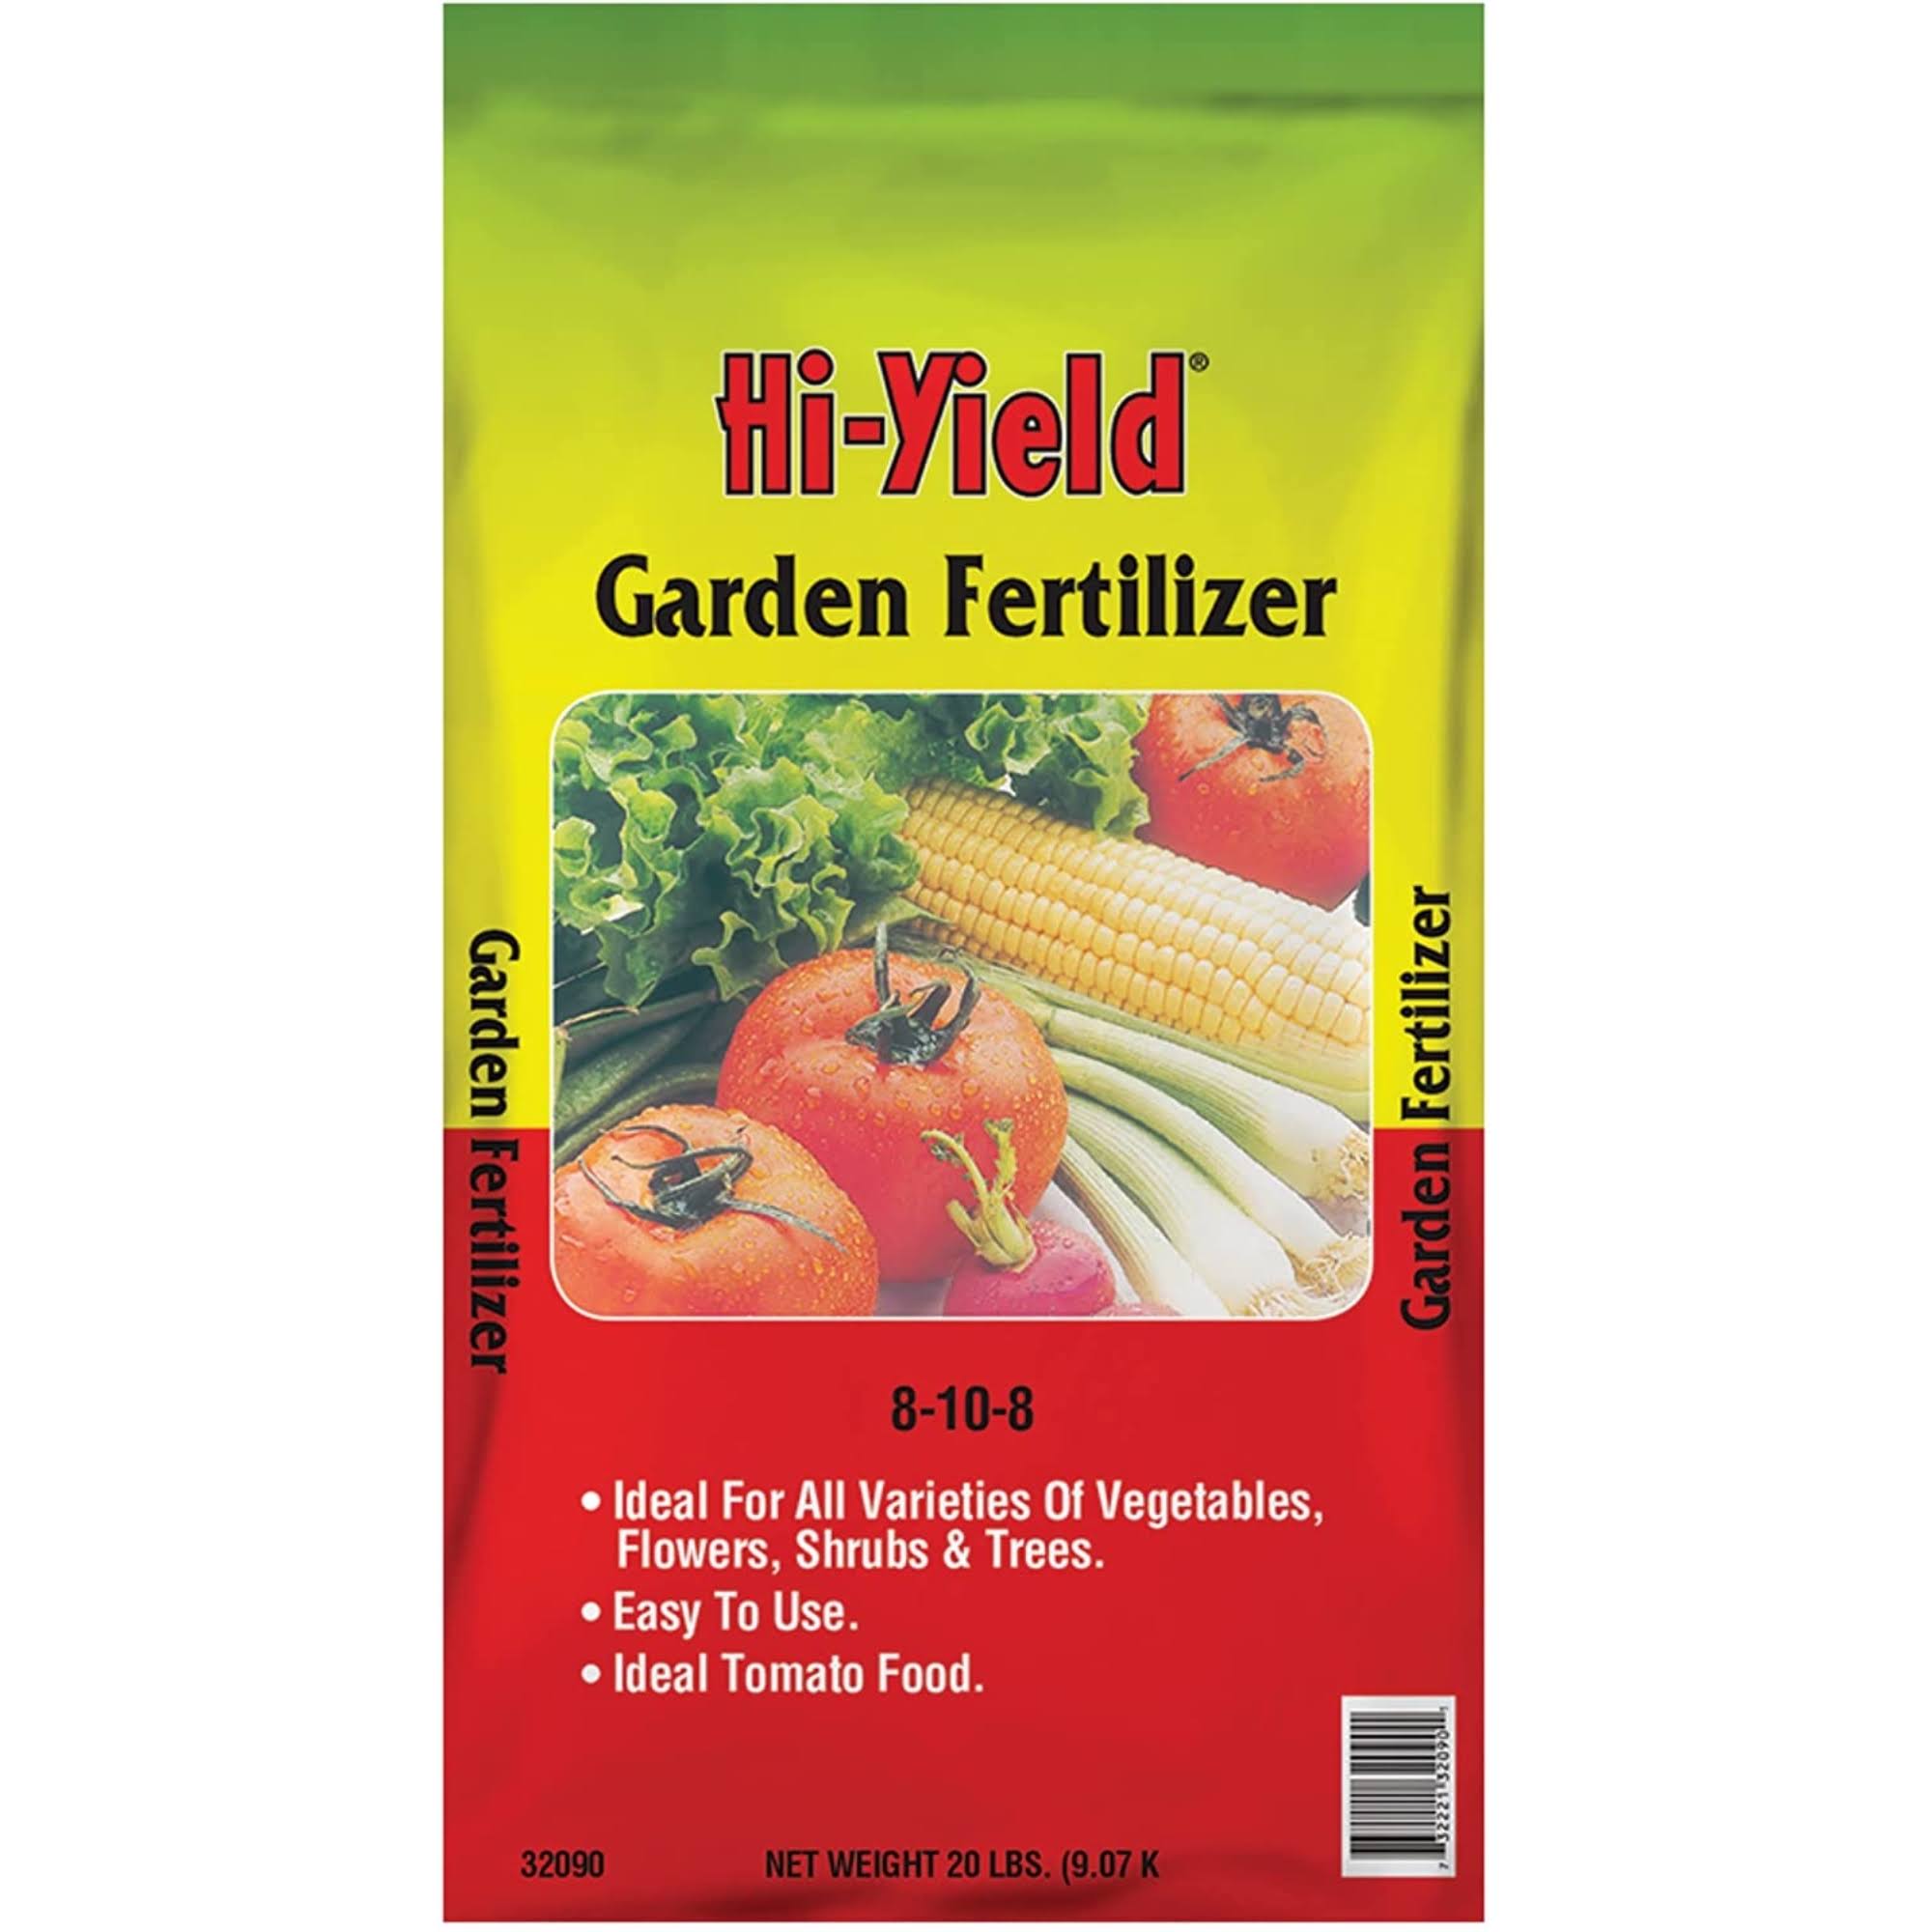 Hi-yield Garden Fertilizer - 20lbs